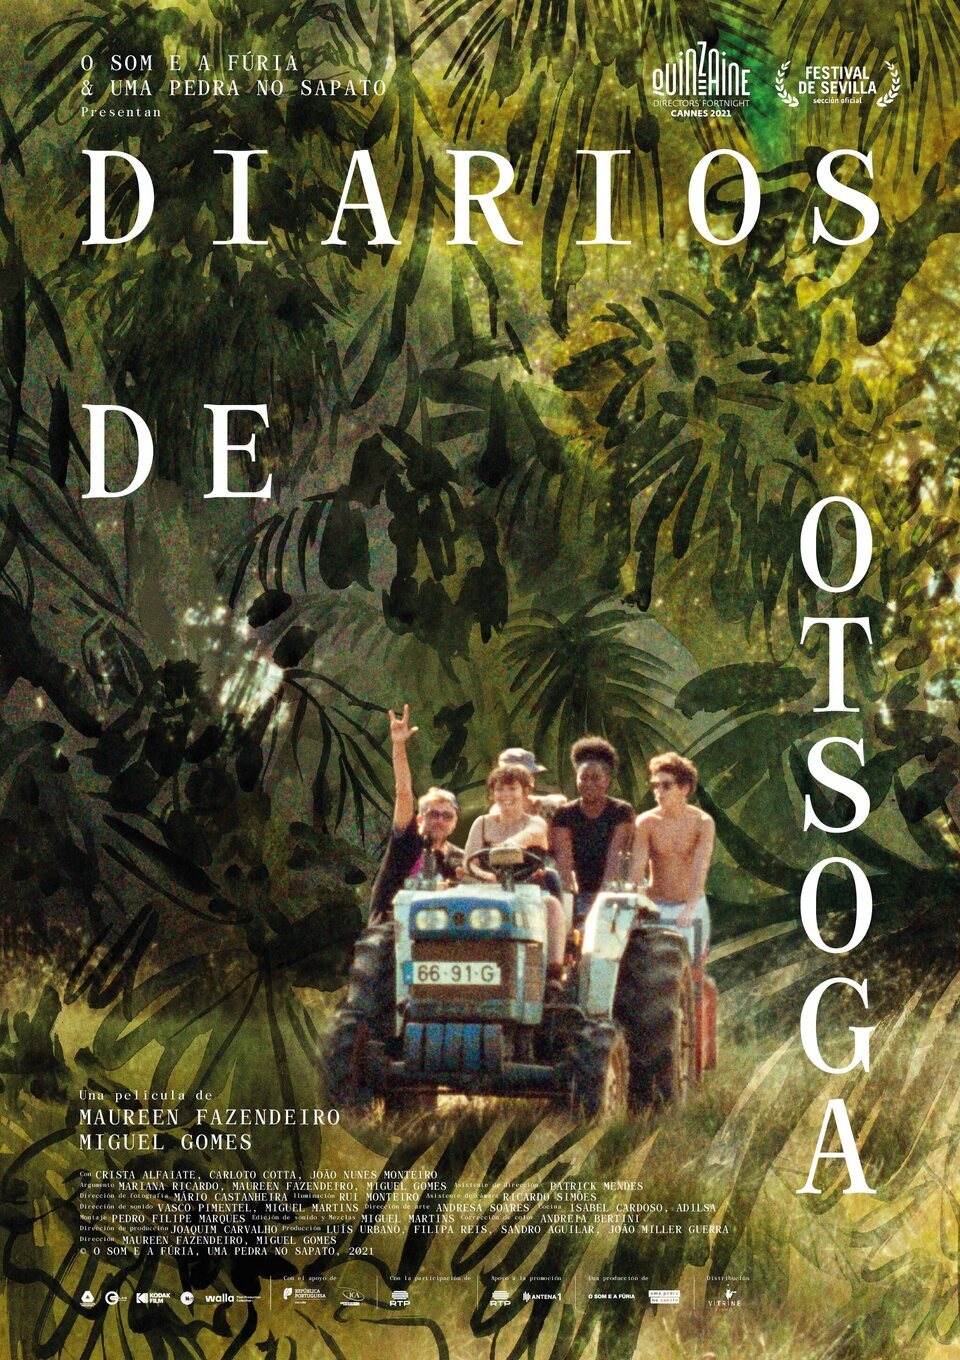 Cartel de Diarios de Otsoga - Diarios de Otsoga